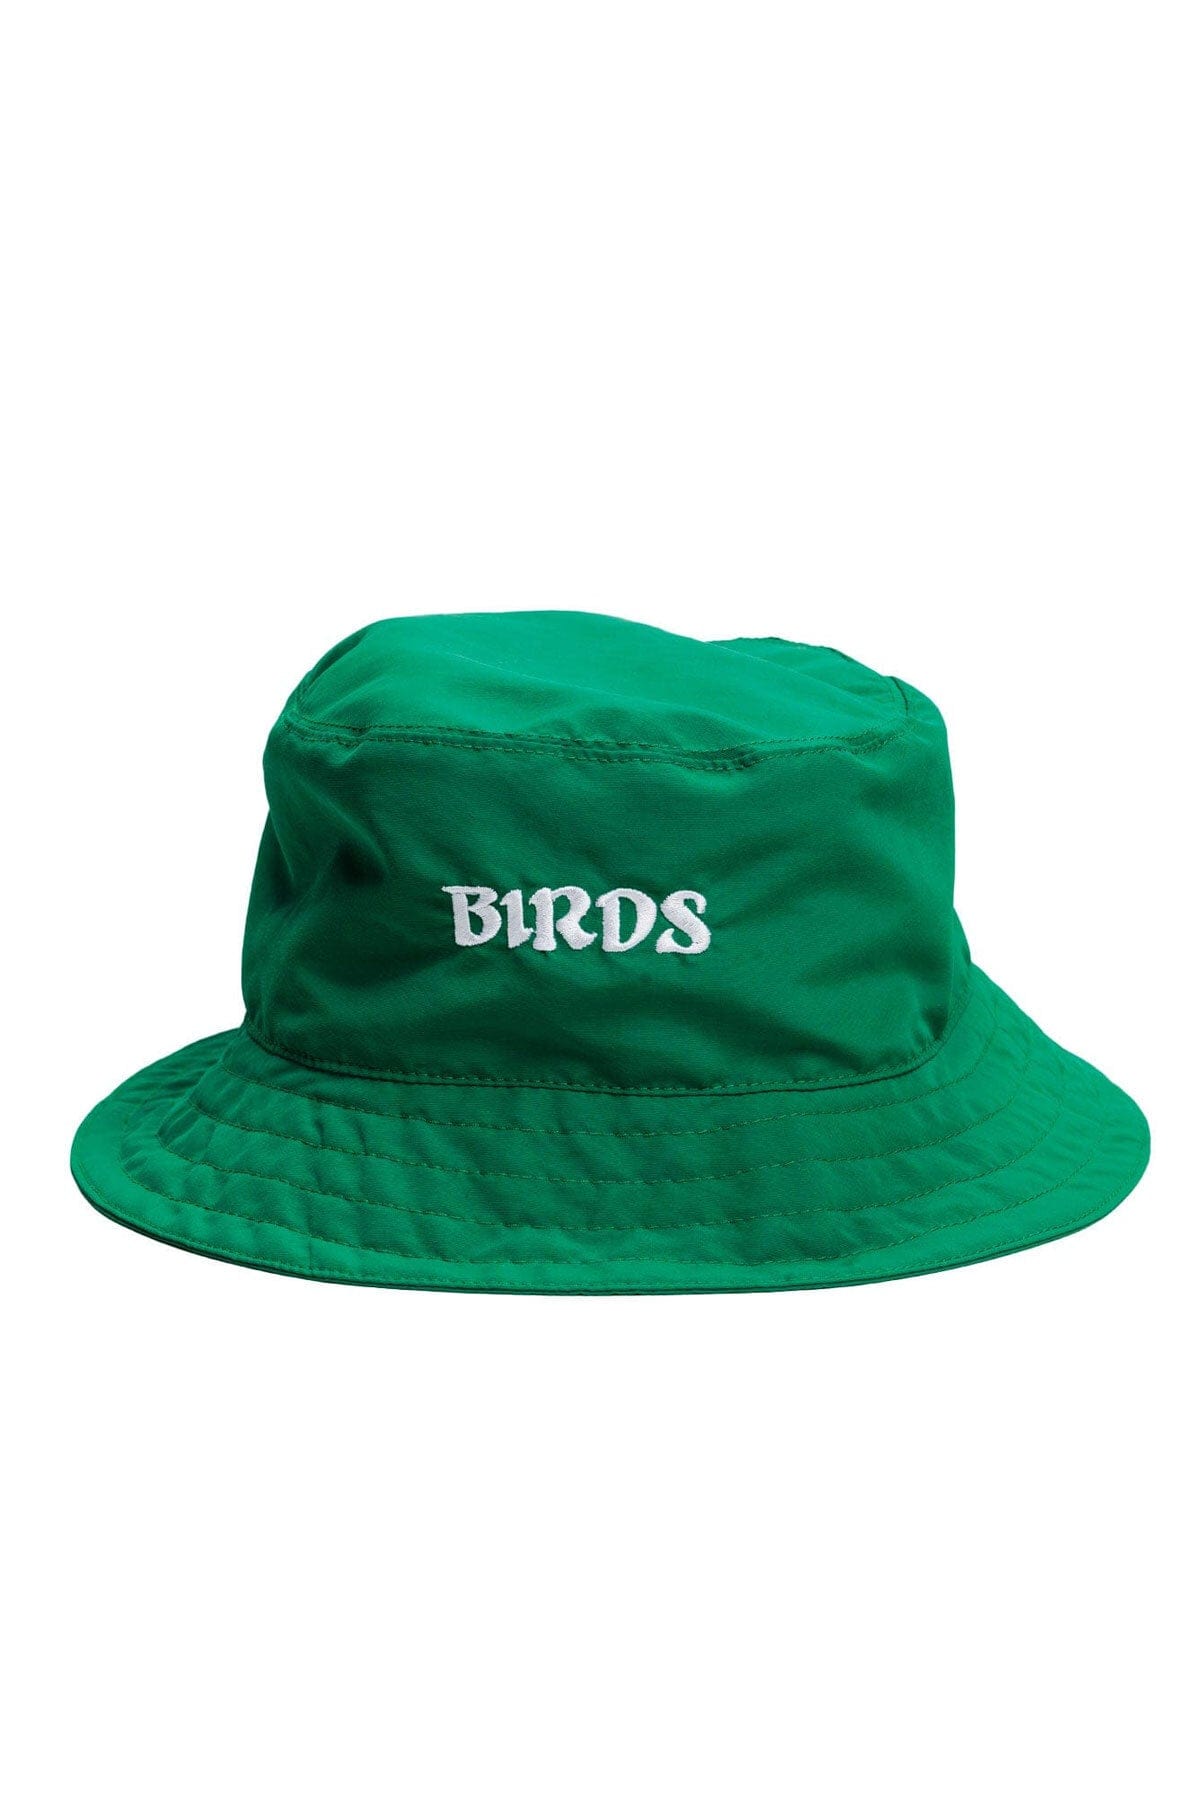 Boathouse Supplex Birds Bucket Hat Kelly Green